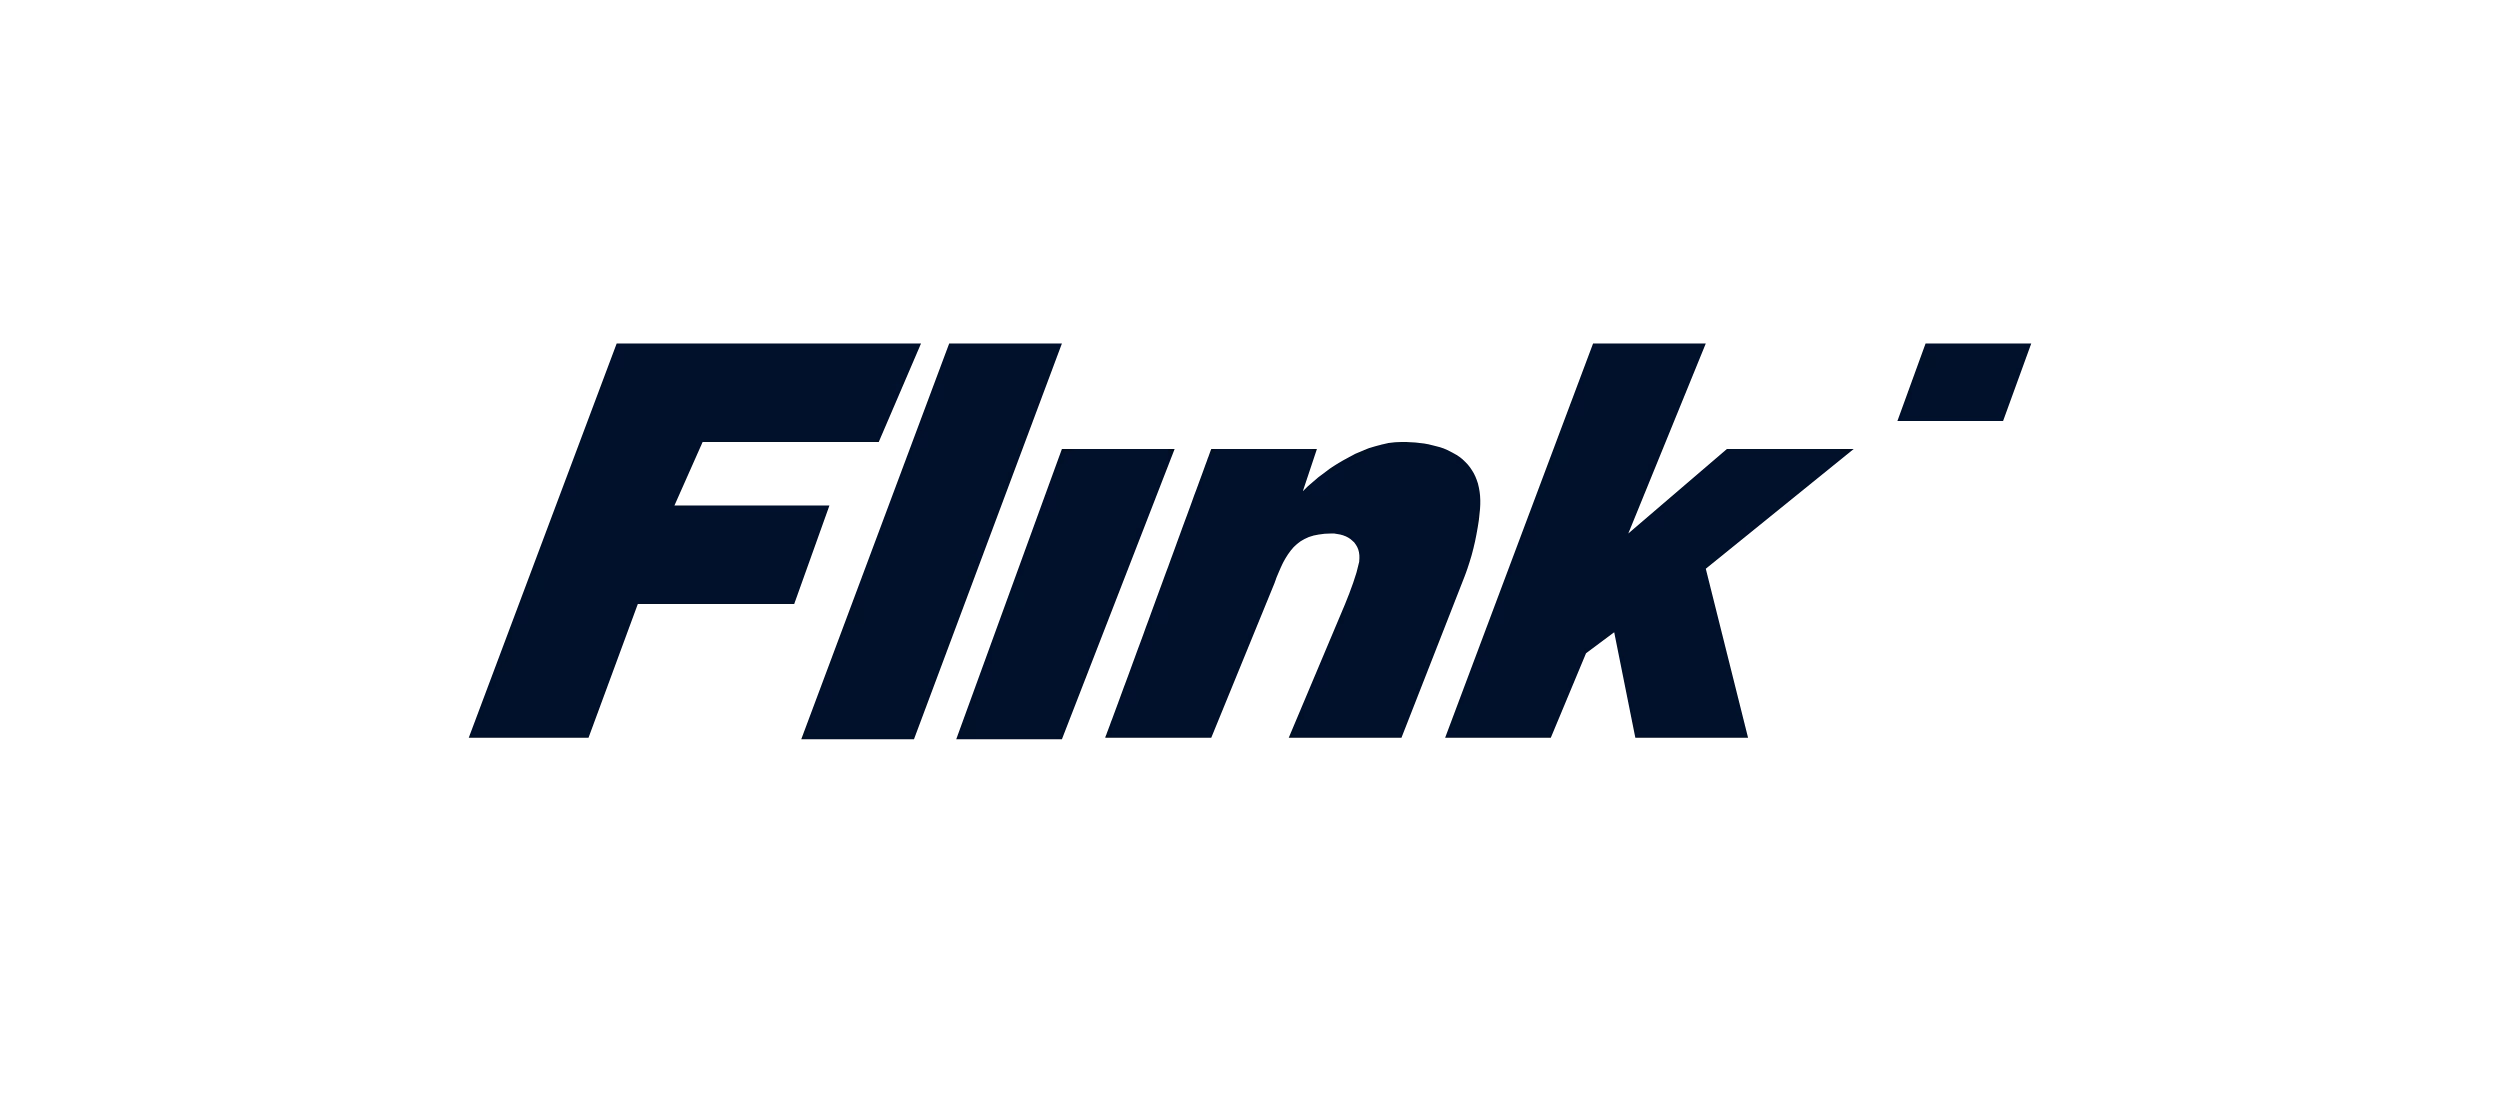 Flink logo